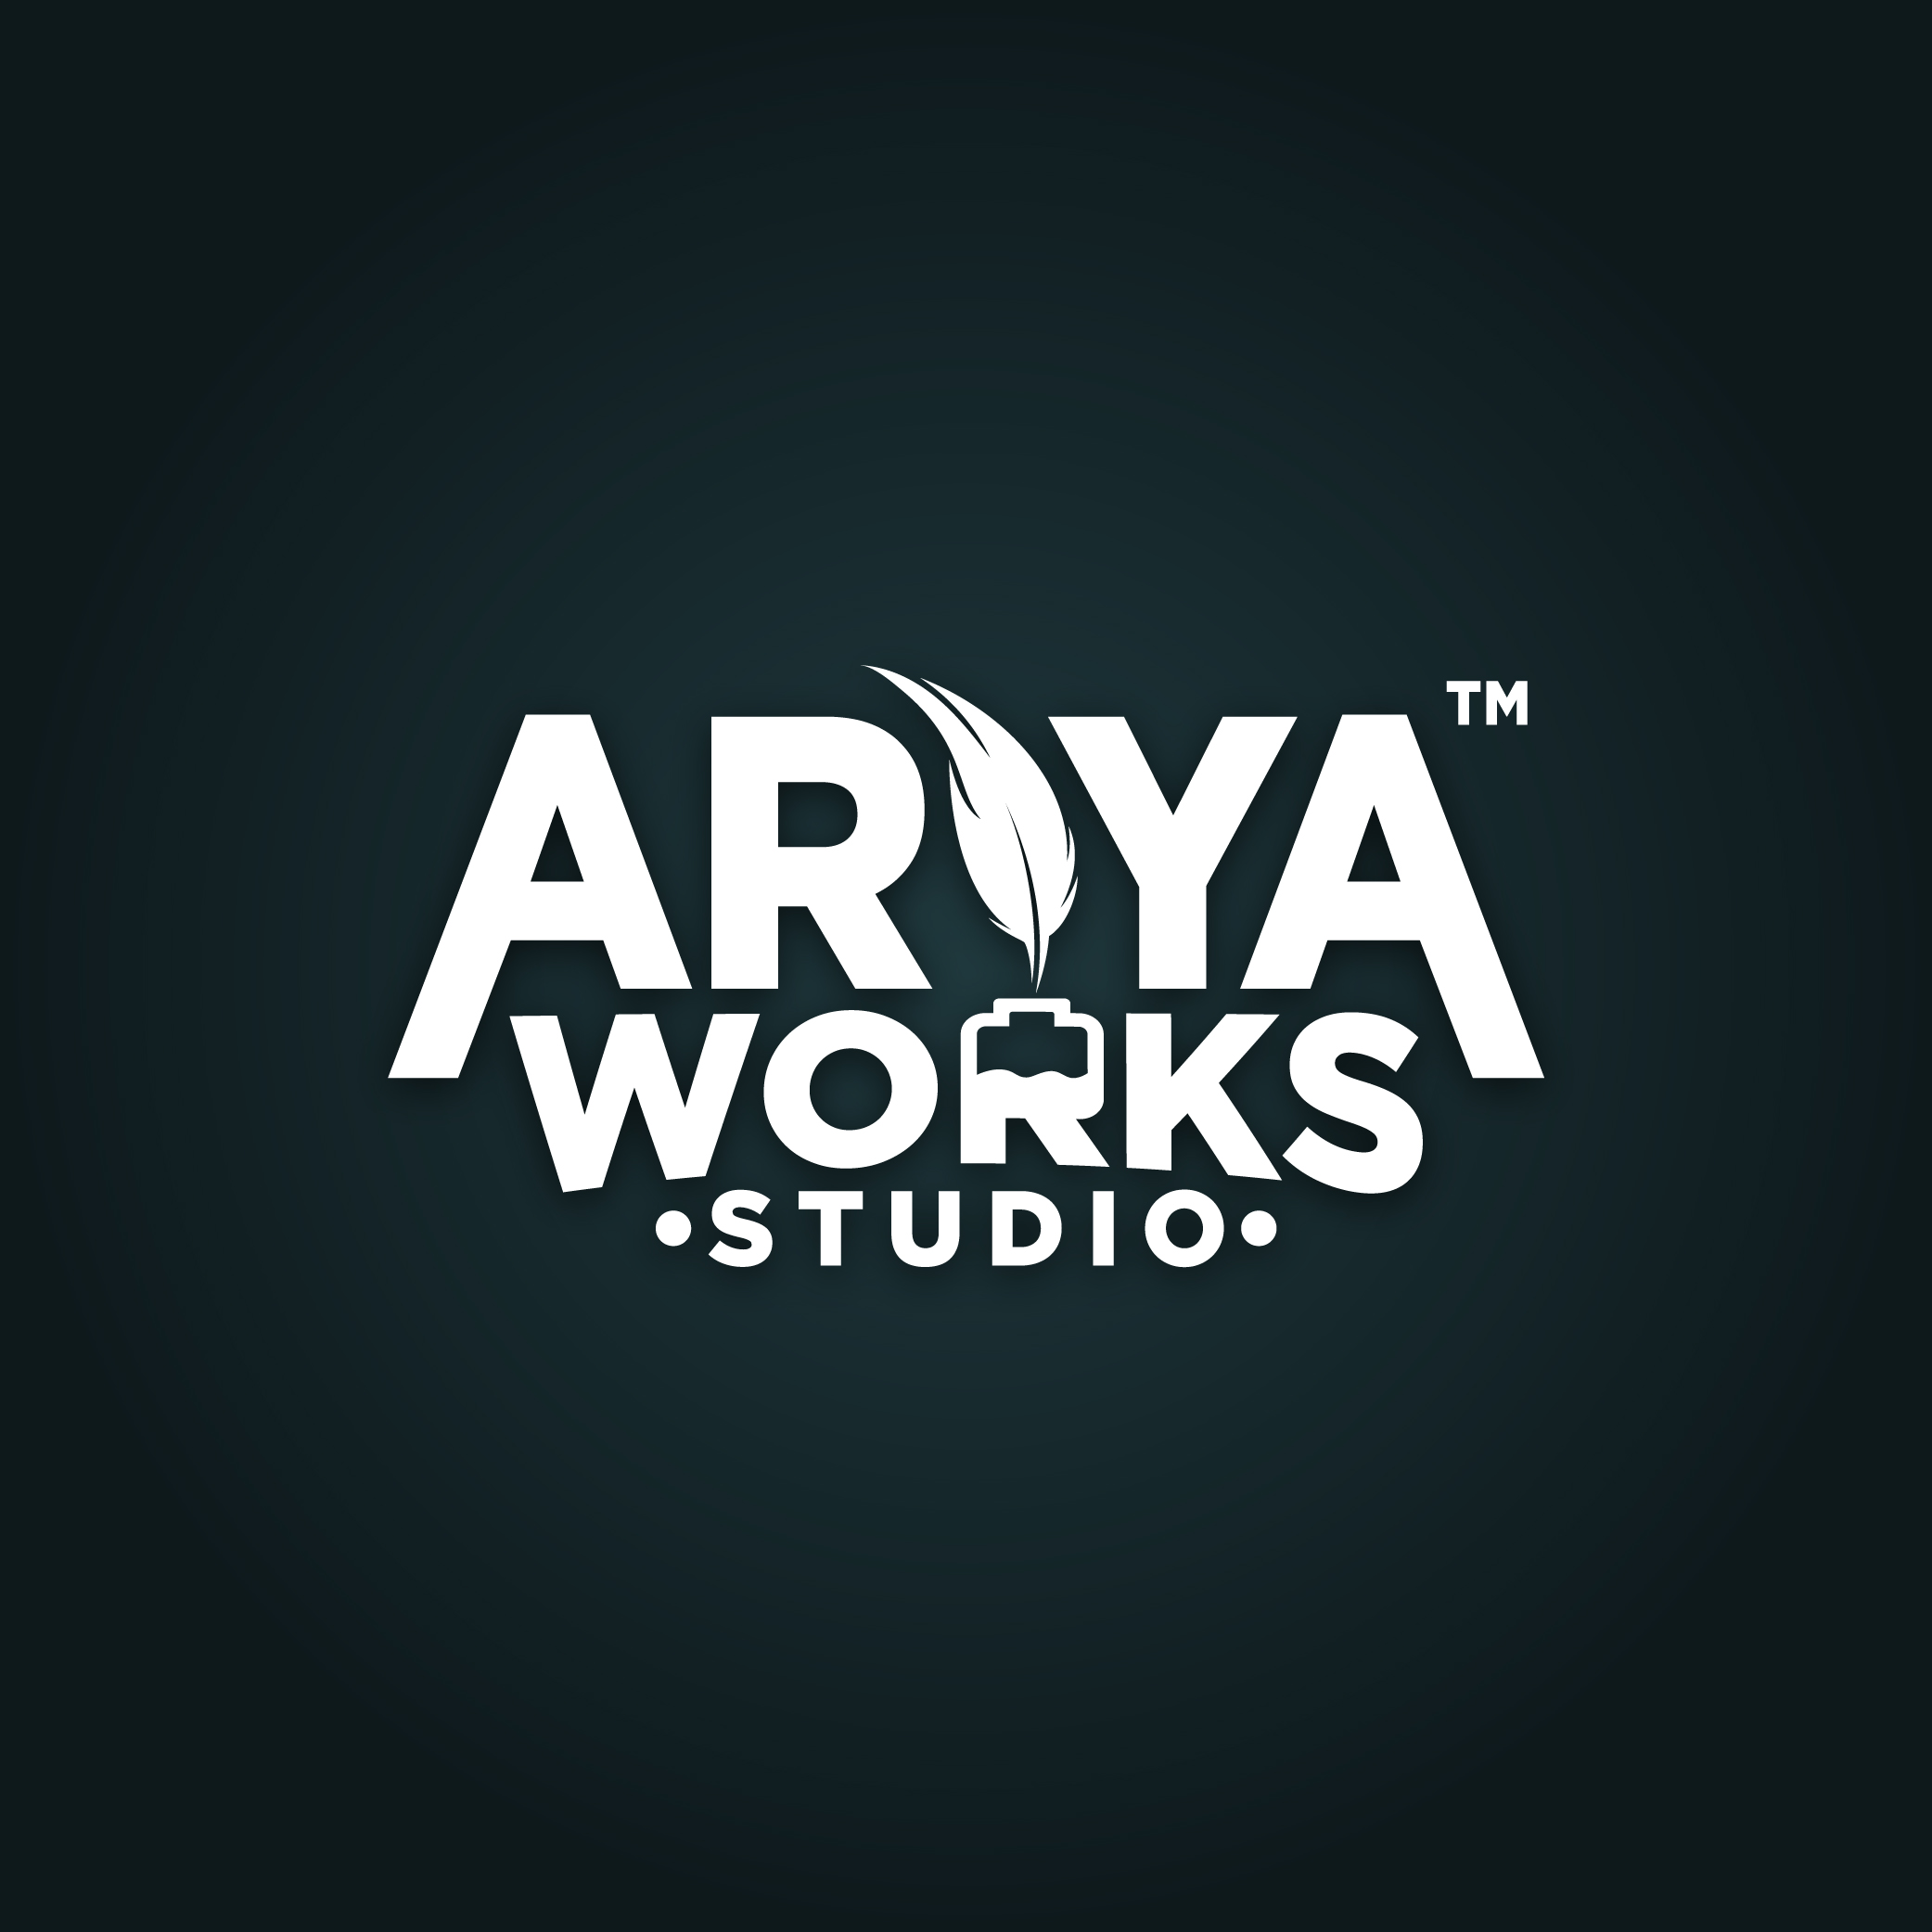 Ariya Works Studio